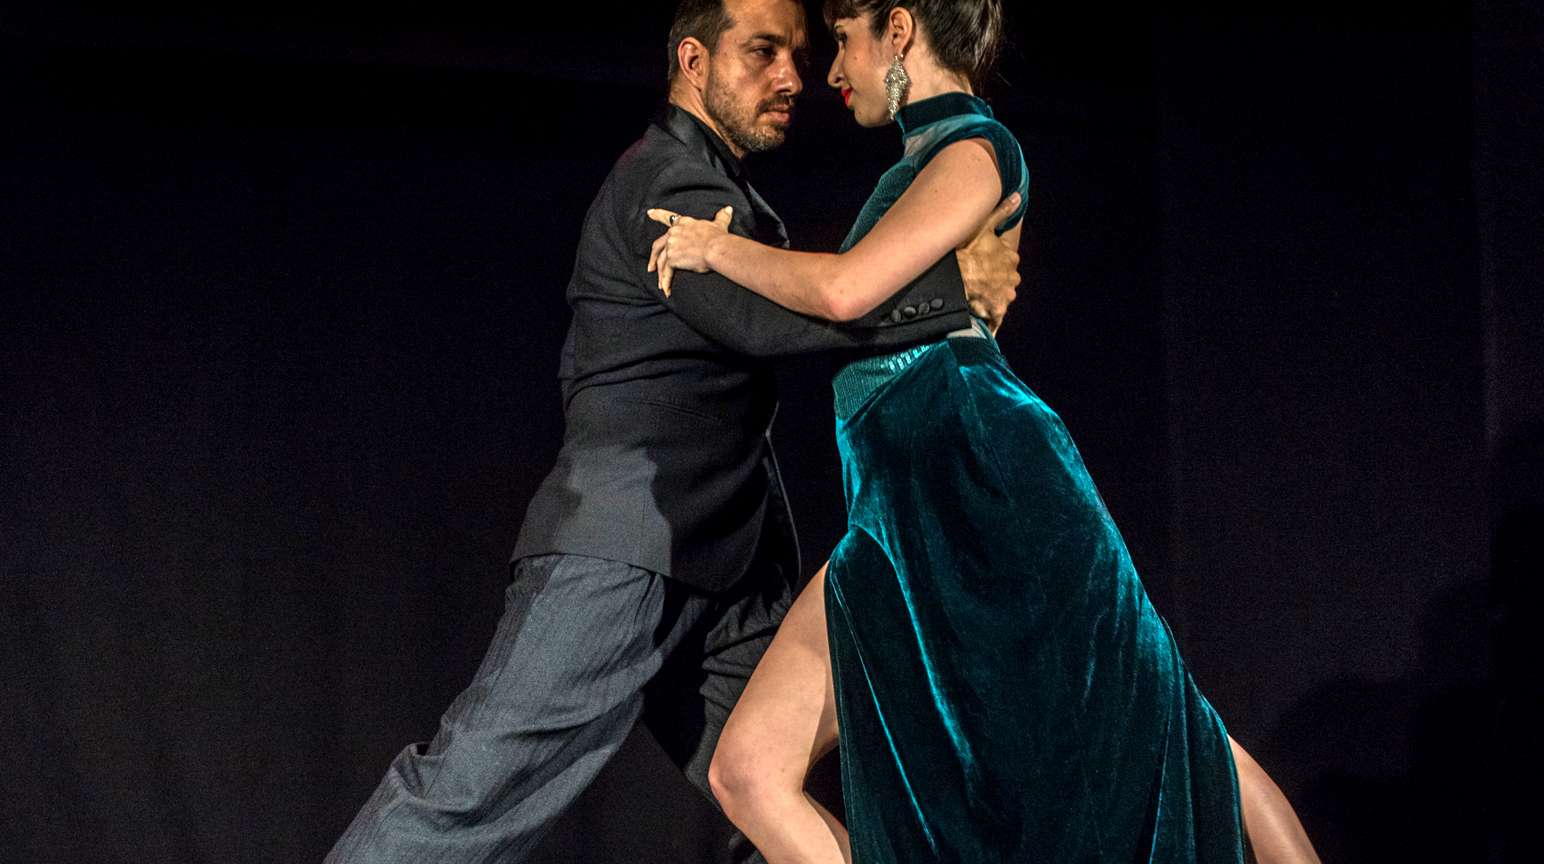 Ballare Tango Argentino a Milano